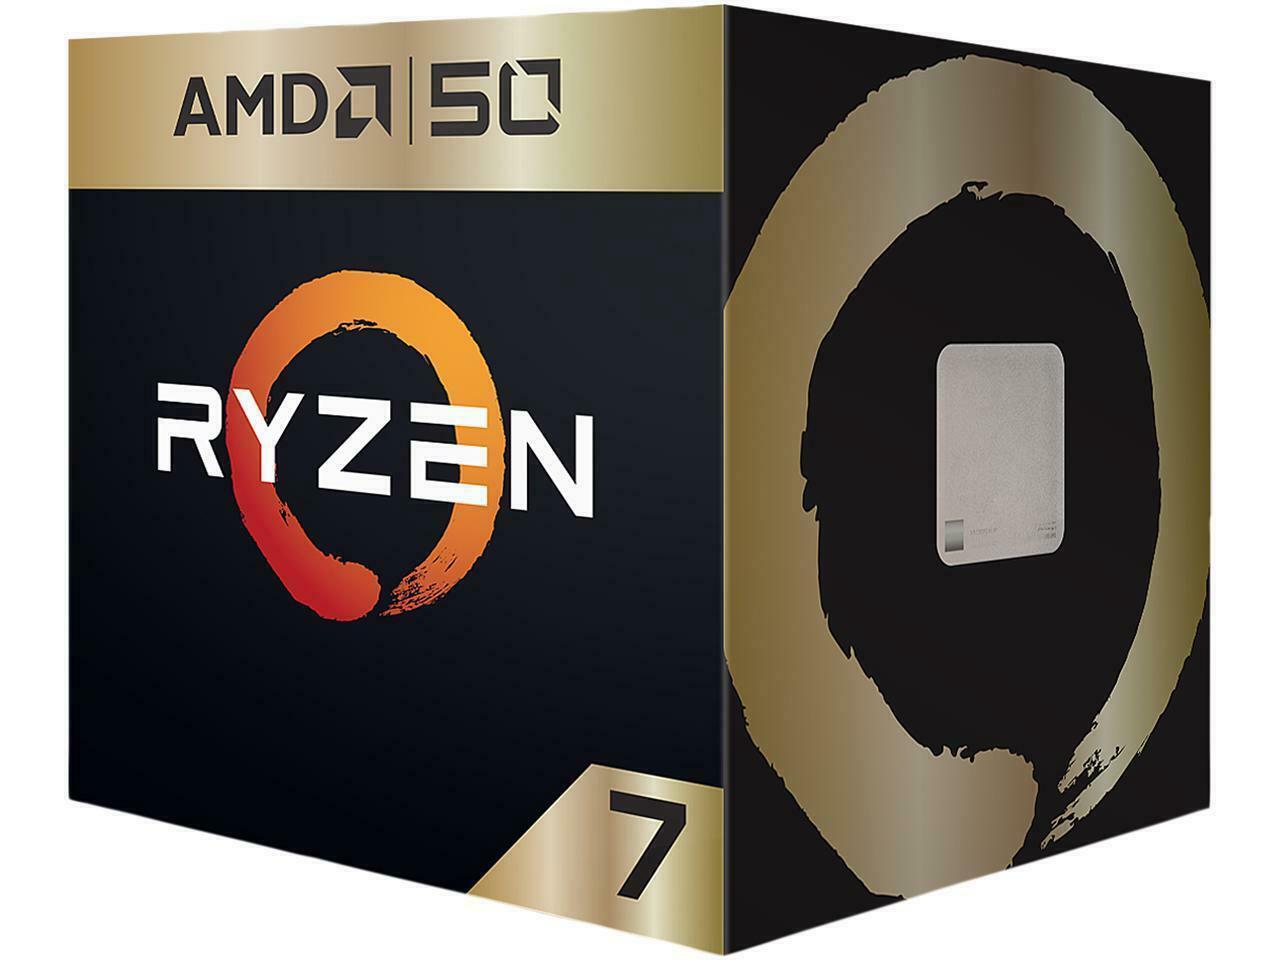 AMD Ryzen 7 2700X Gold Limited Edition,8 Core, 16 Thread, 4.3GHz - AM4